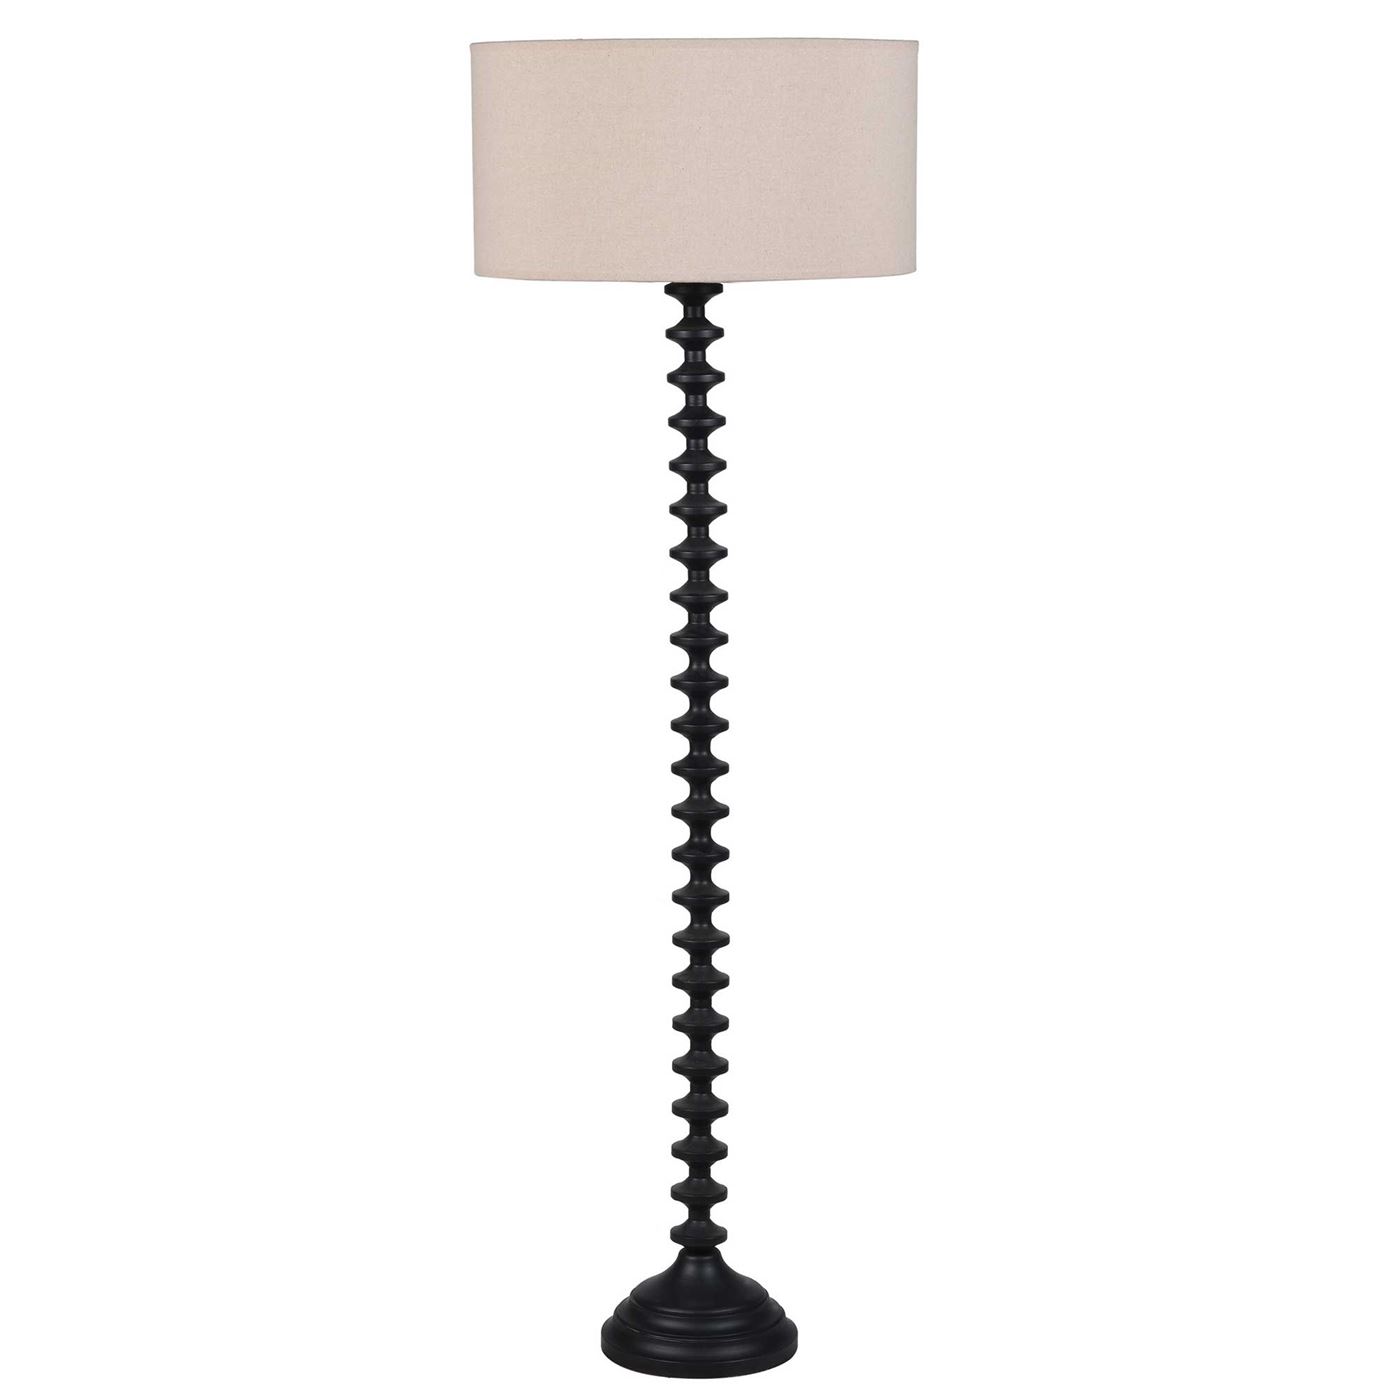 Photo of Ridged base floor lamp in black